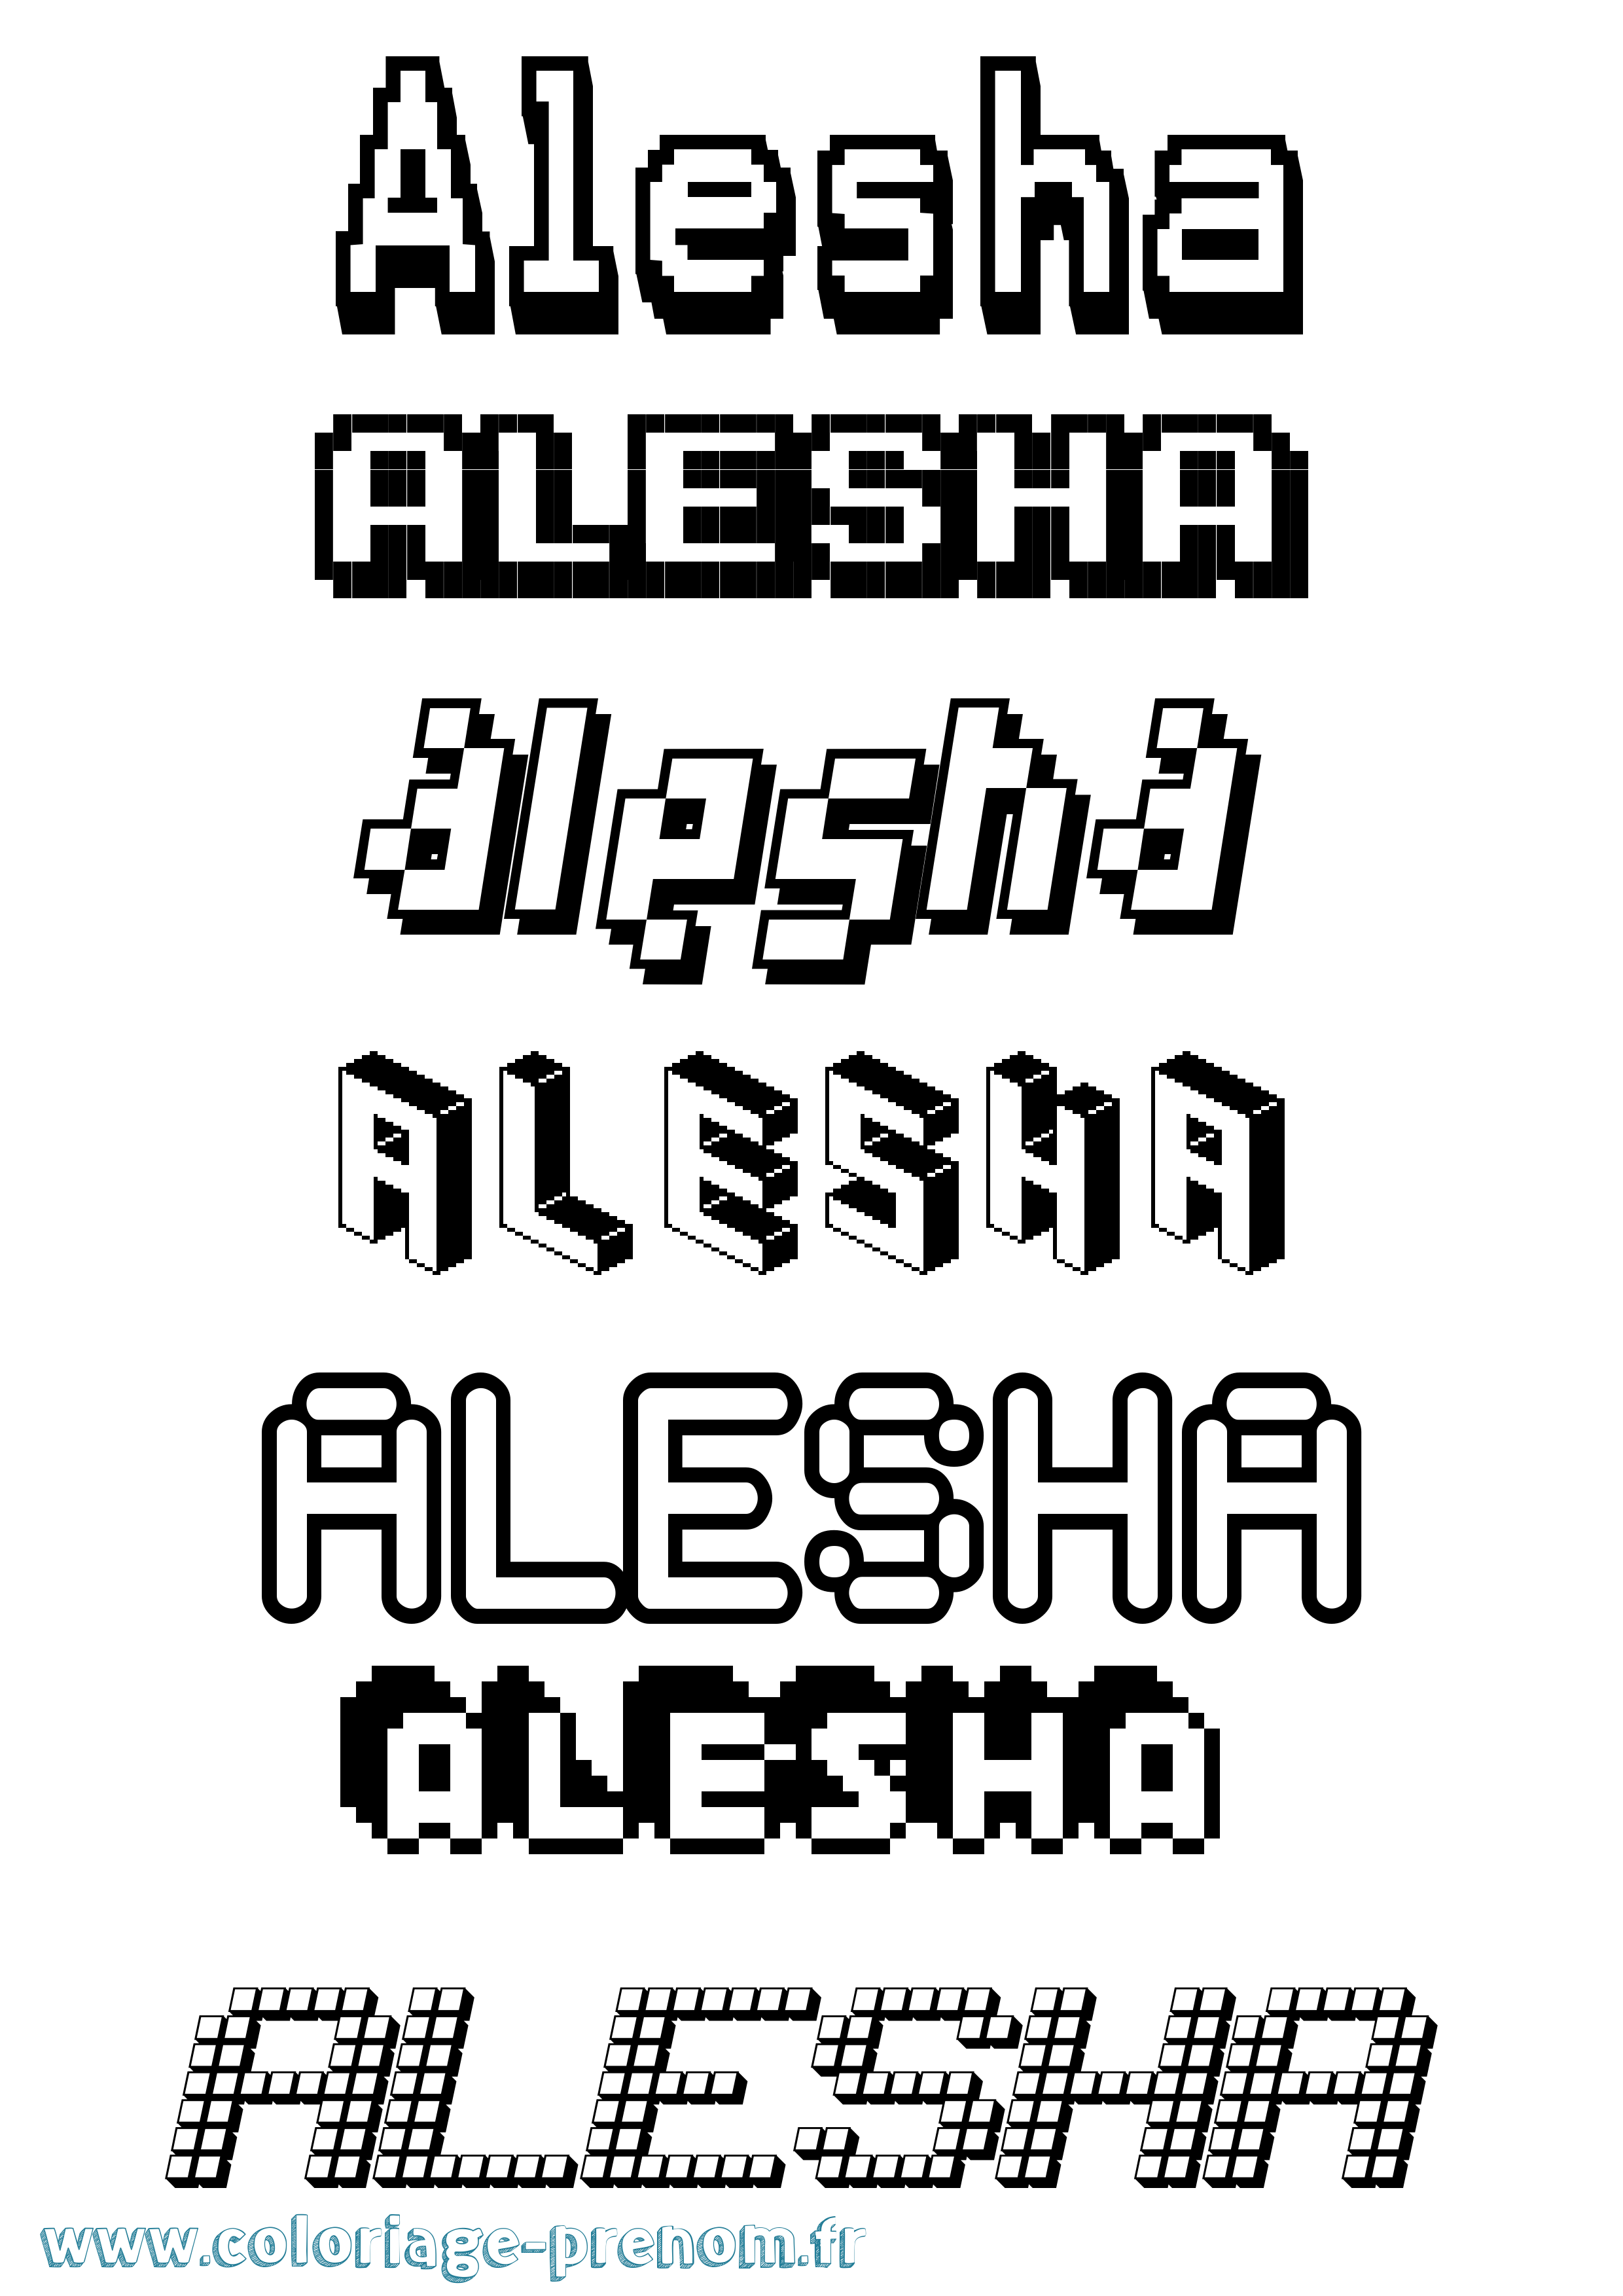 Coloriage prénom Alesha Pixel